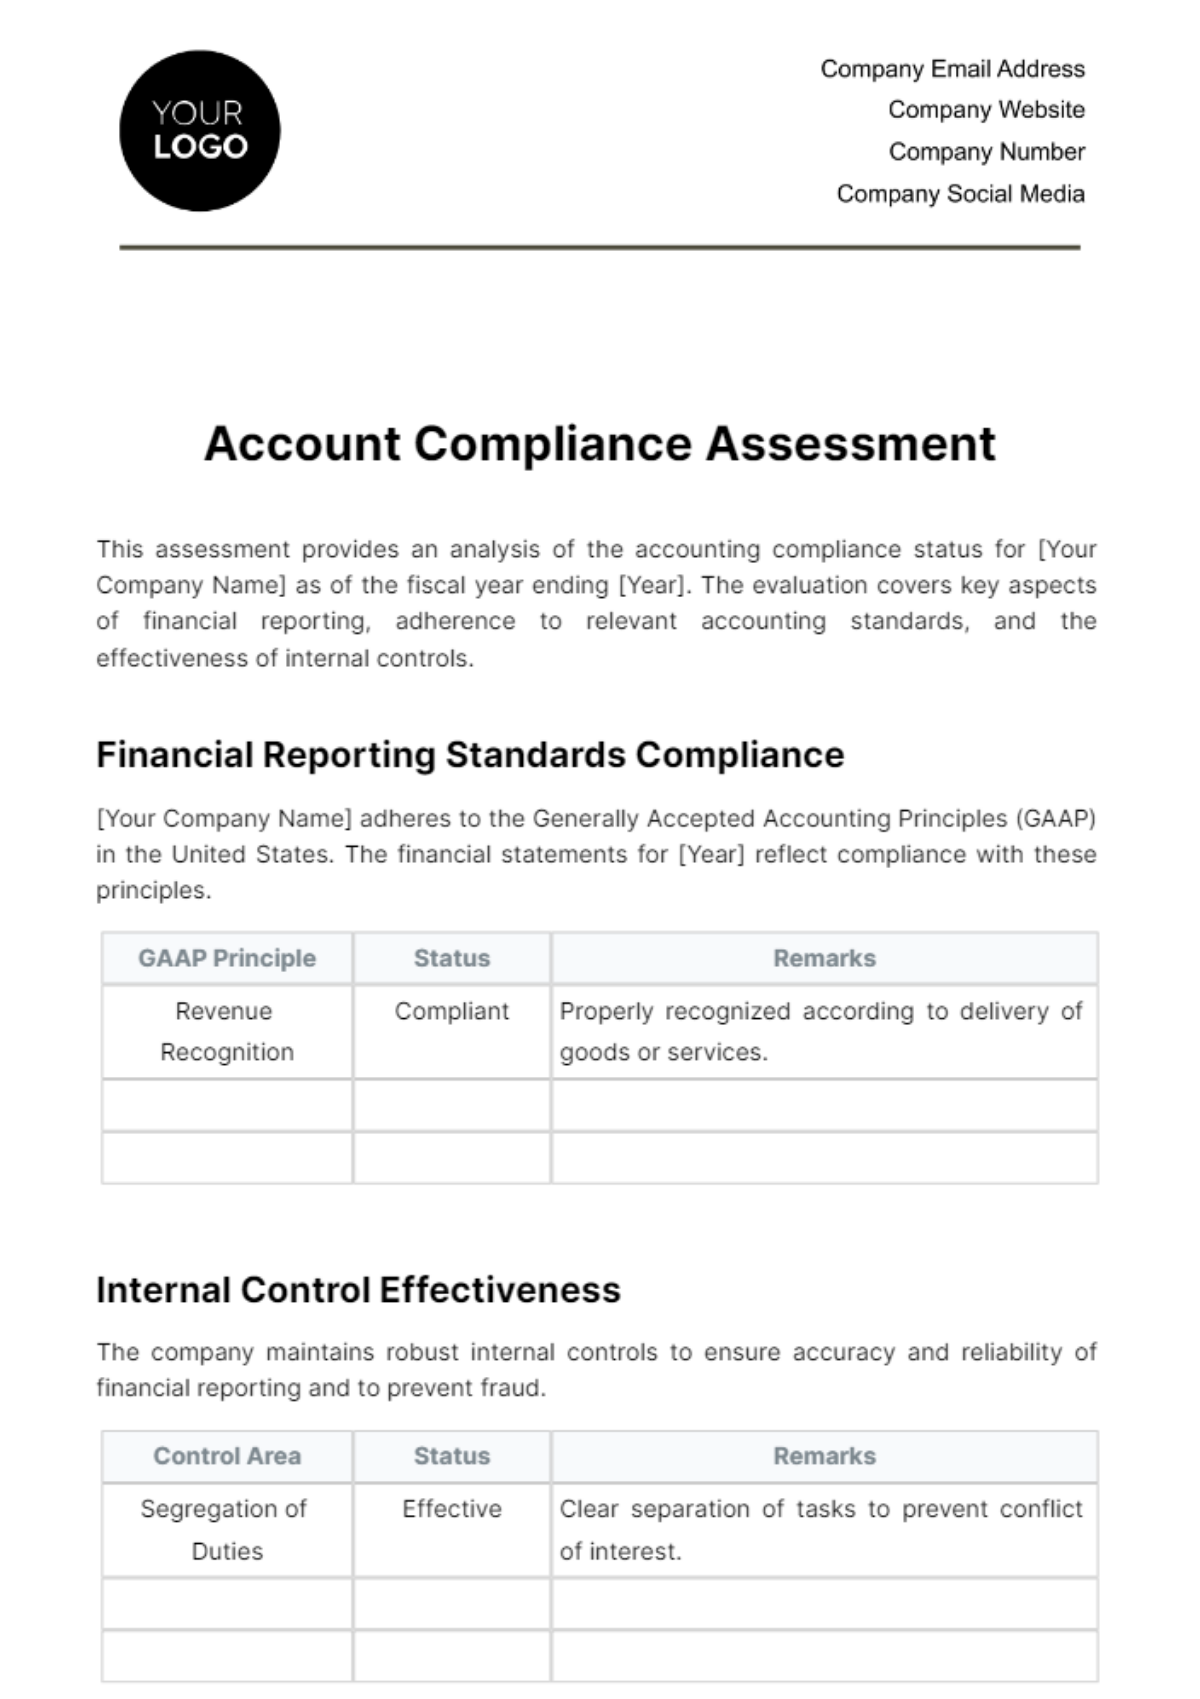 Account Compliance Assessment Template